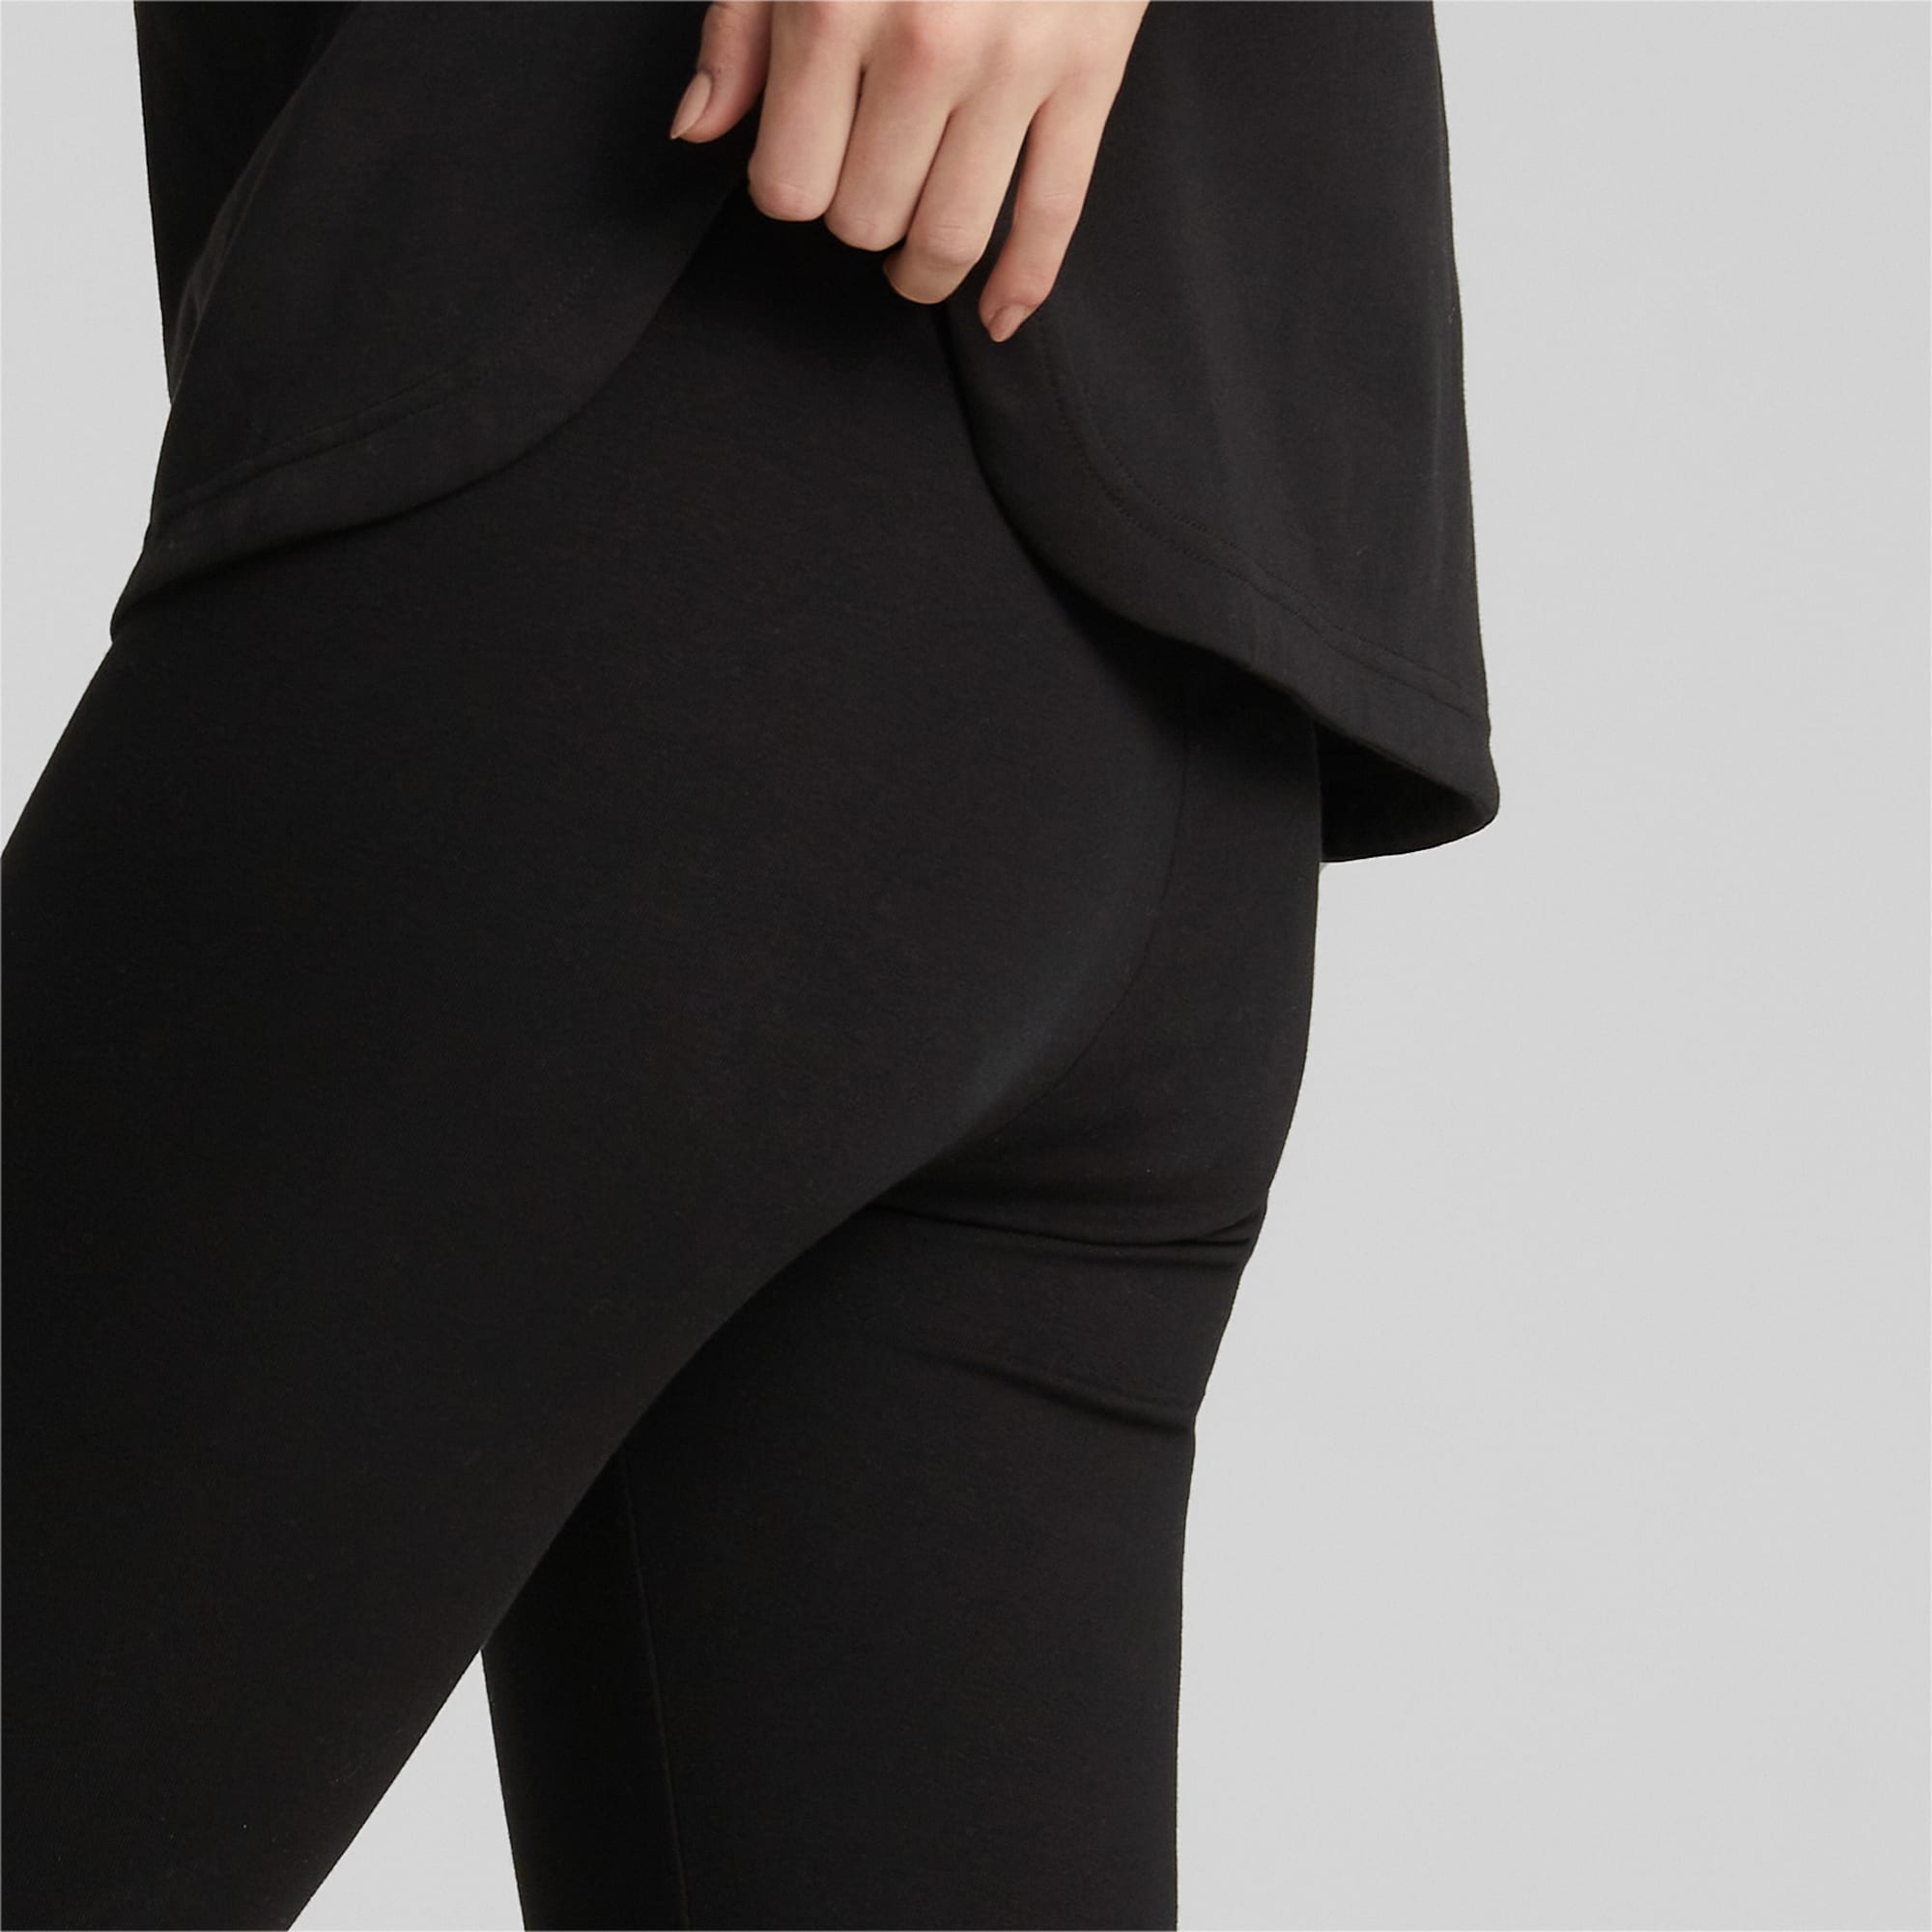 Women's PUMA Yoga Pants in Black size XL, PUMA